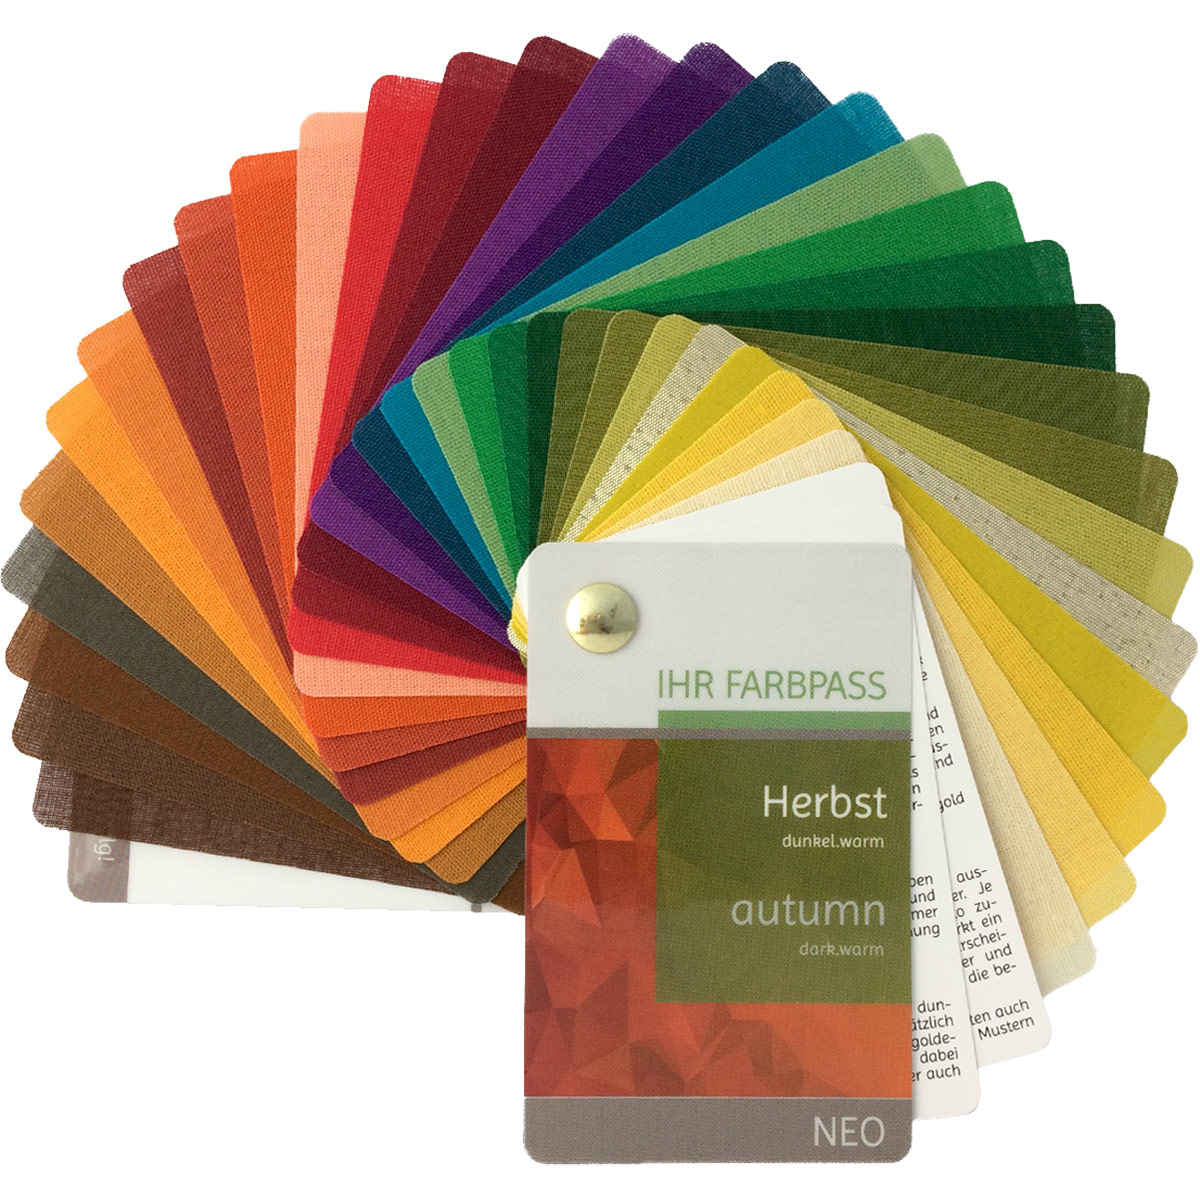 Farbpass Herbst - Neo, 30 Farben